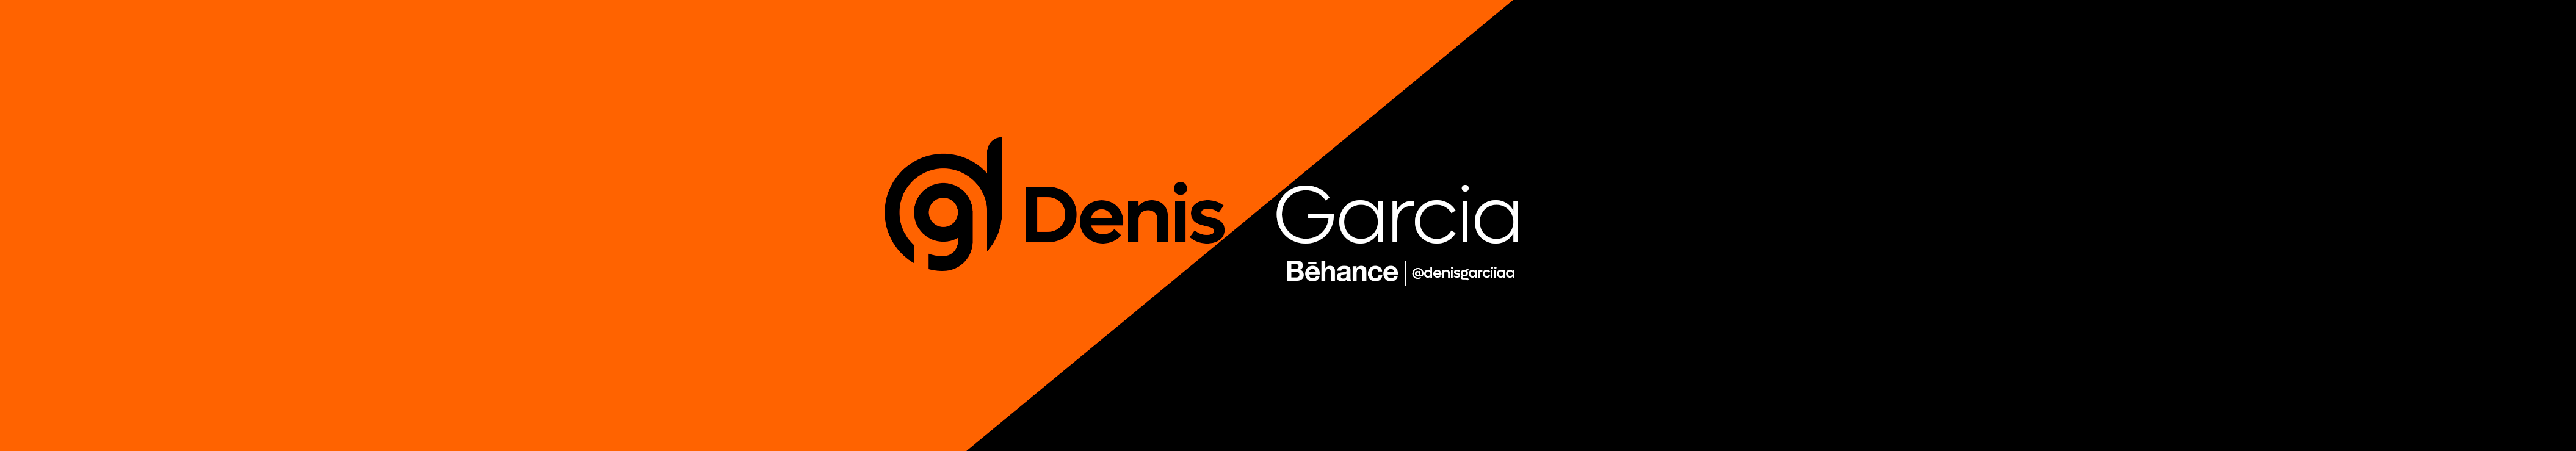 Denis Garcia's profile banner